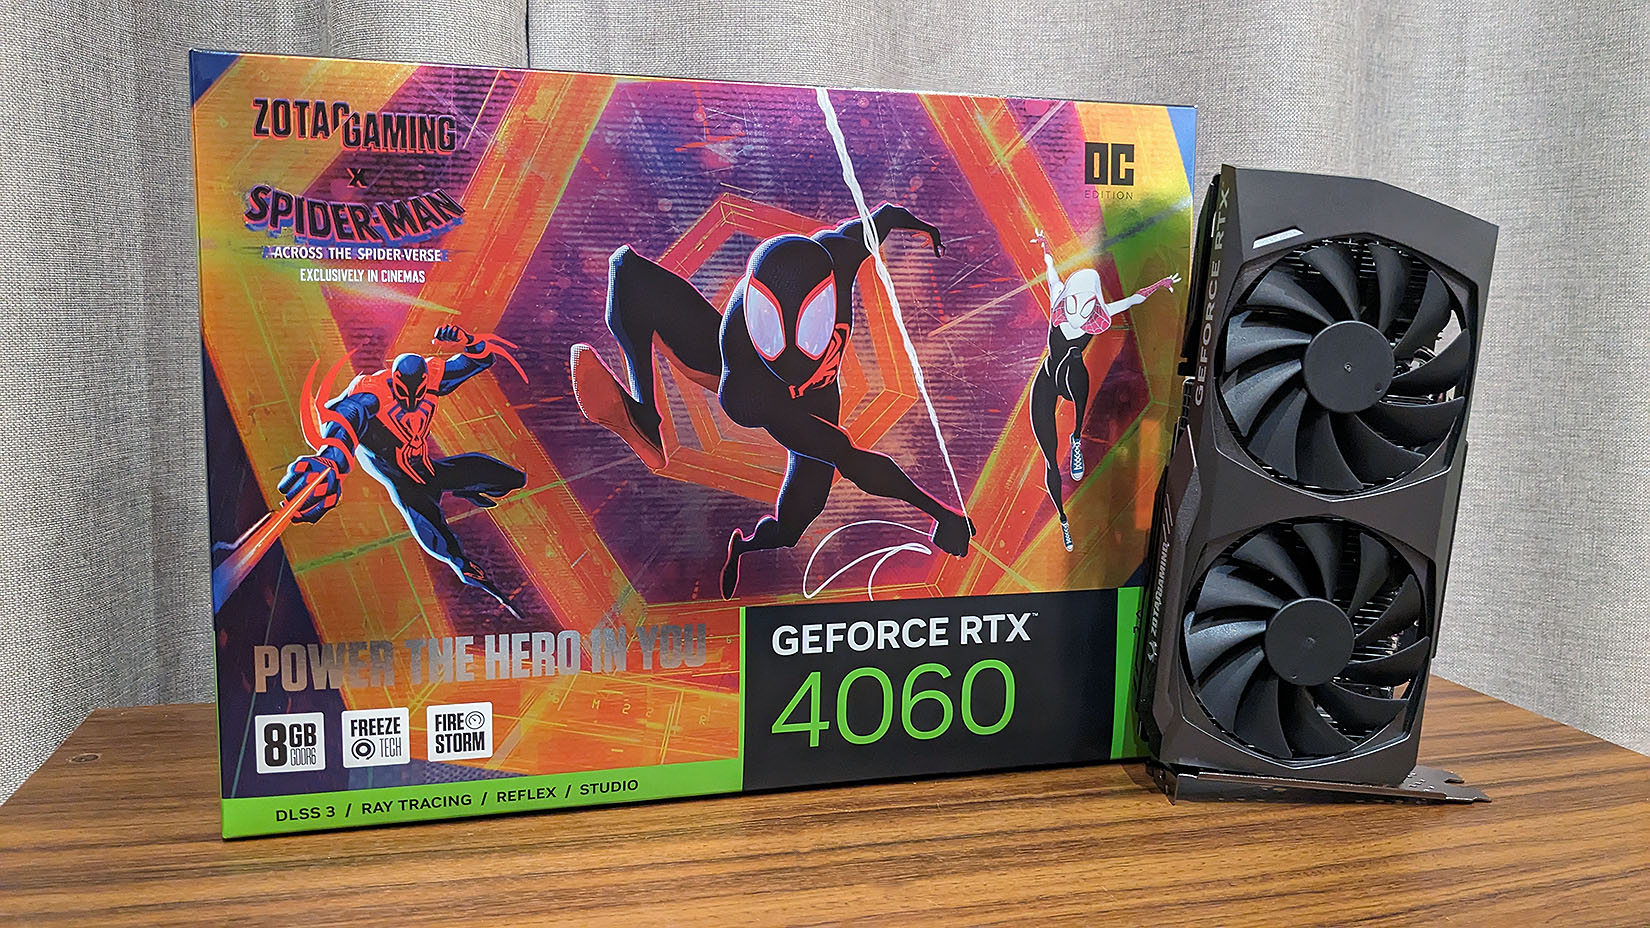 Zotac GeForce RTX 4060 OC Spider-Man GPU review | PC Gamer